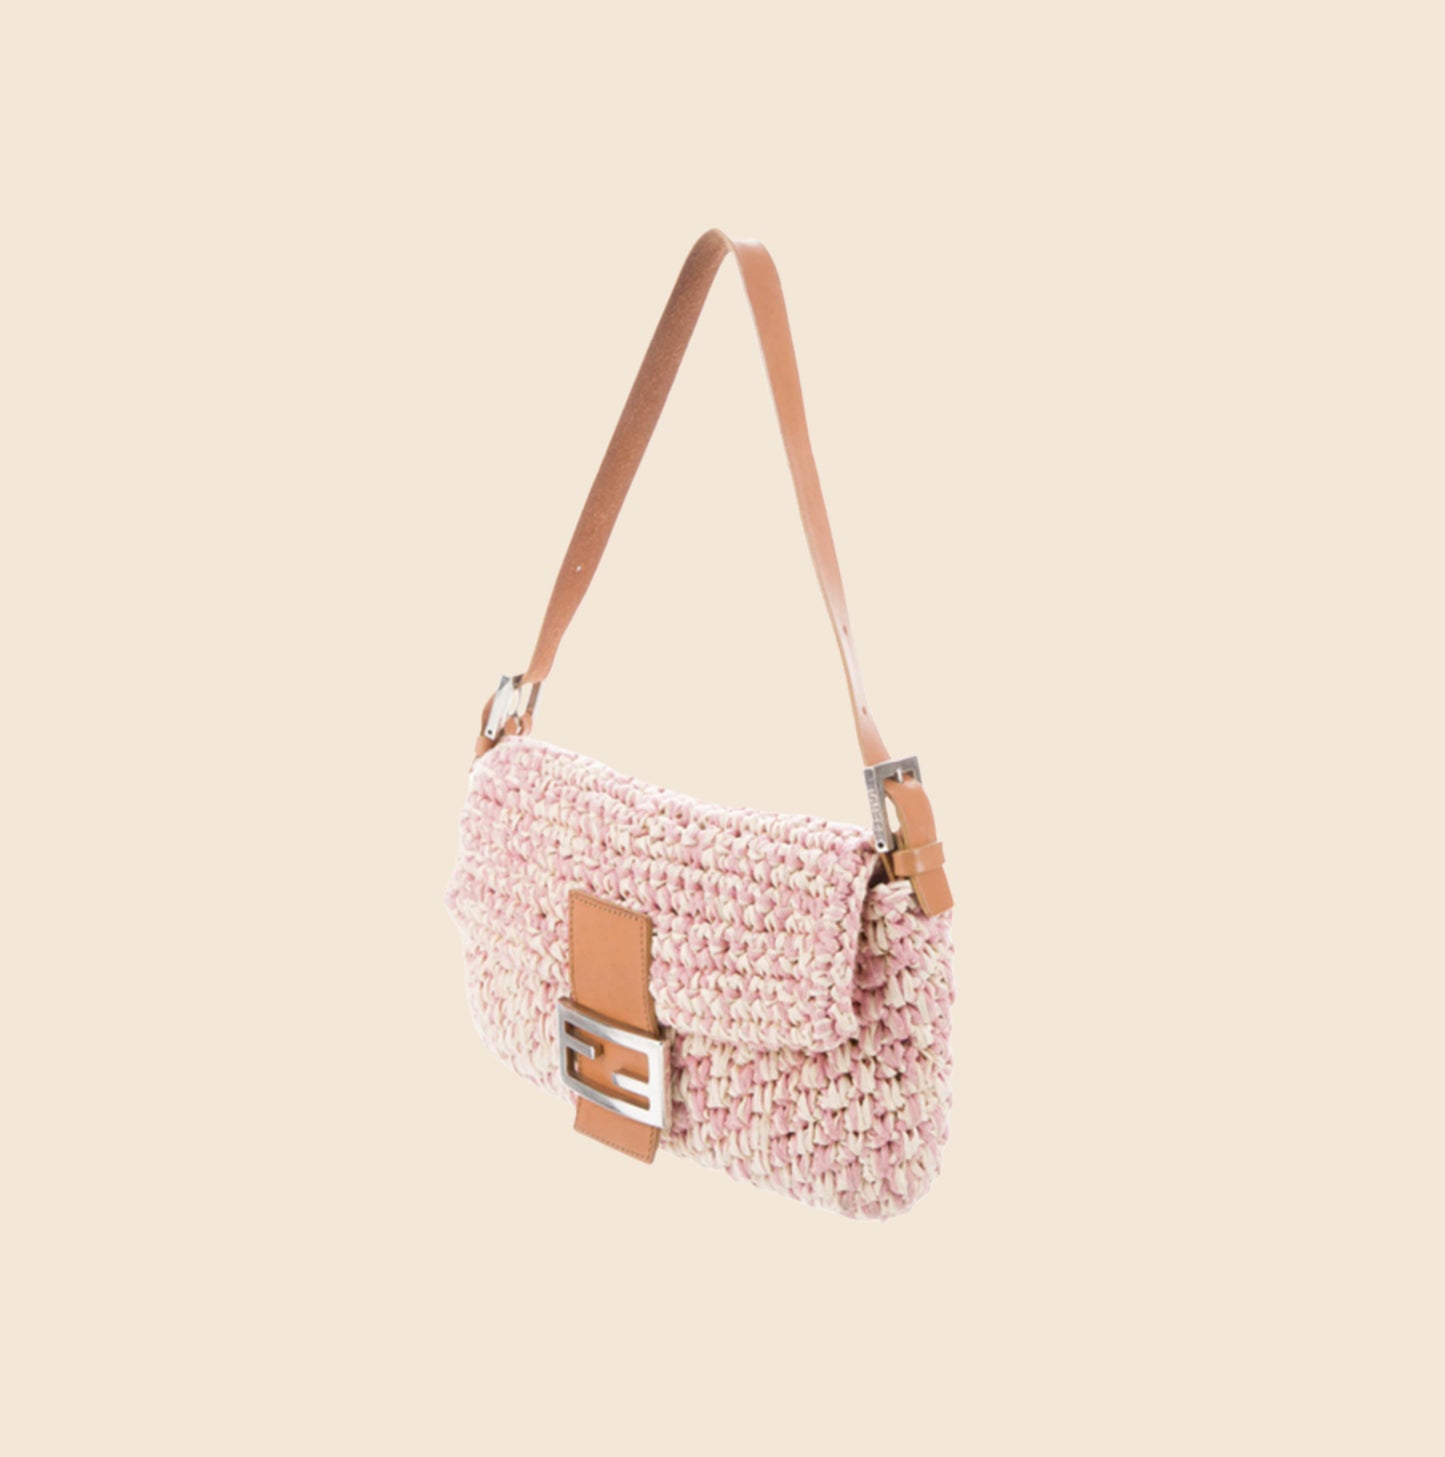 Fendi Pink Baguette Bag FENDIFRESIA Collection